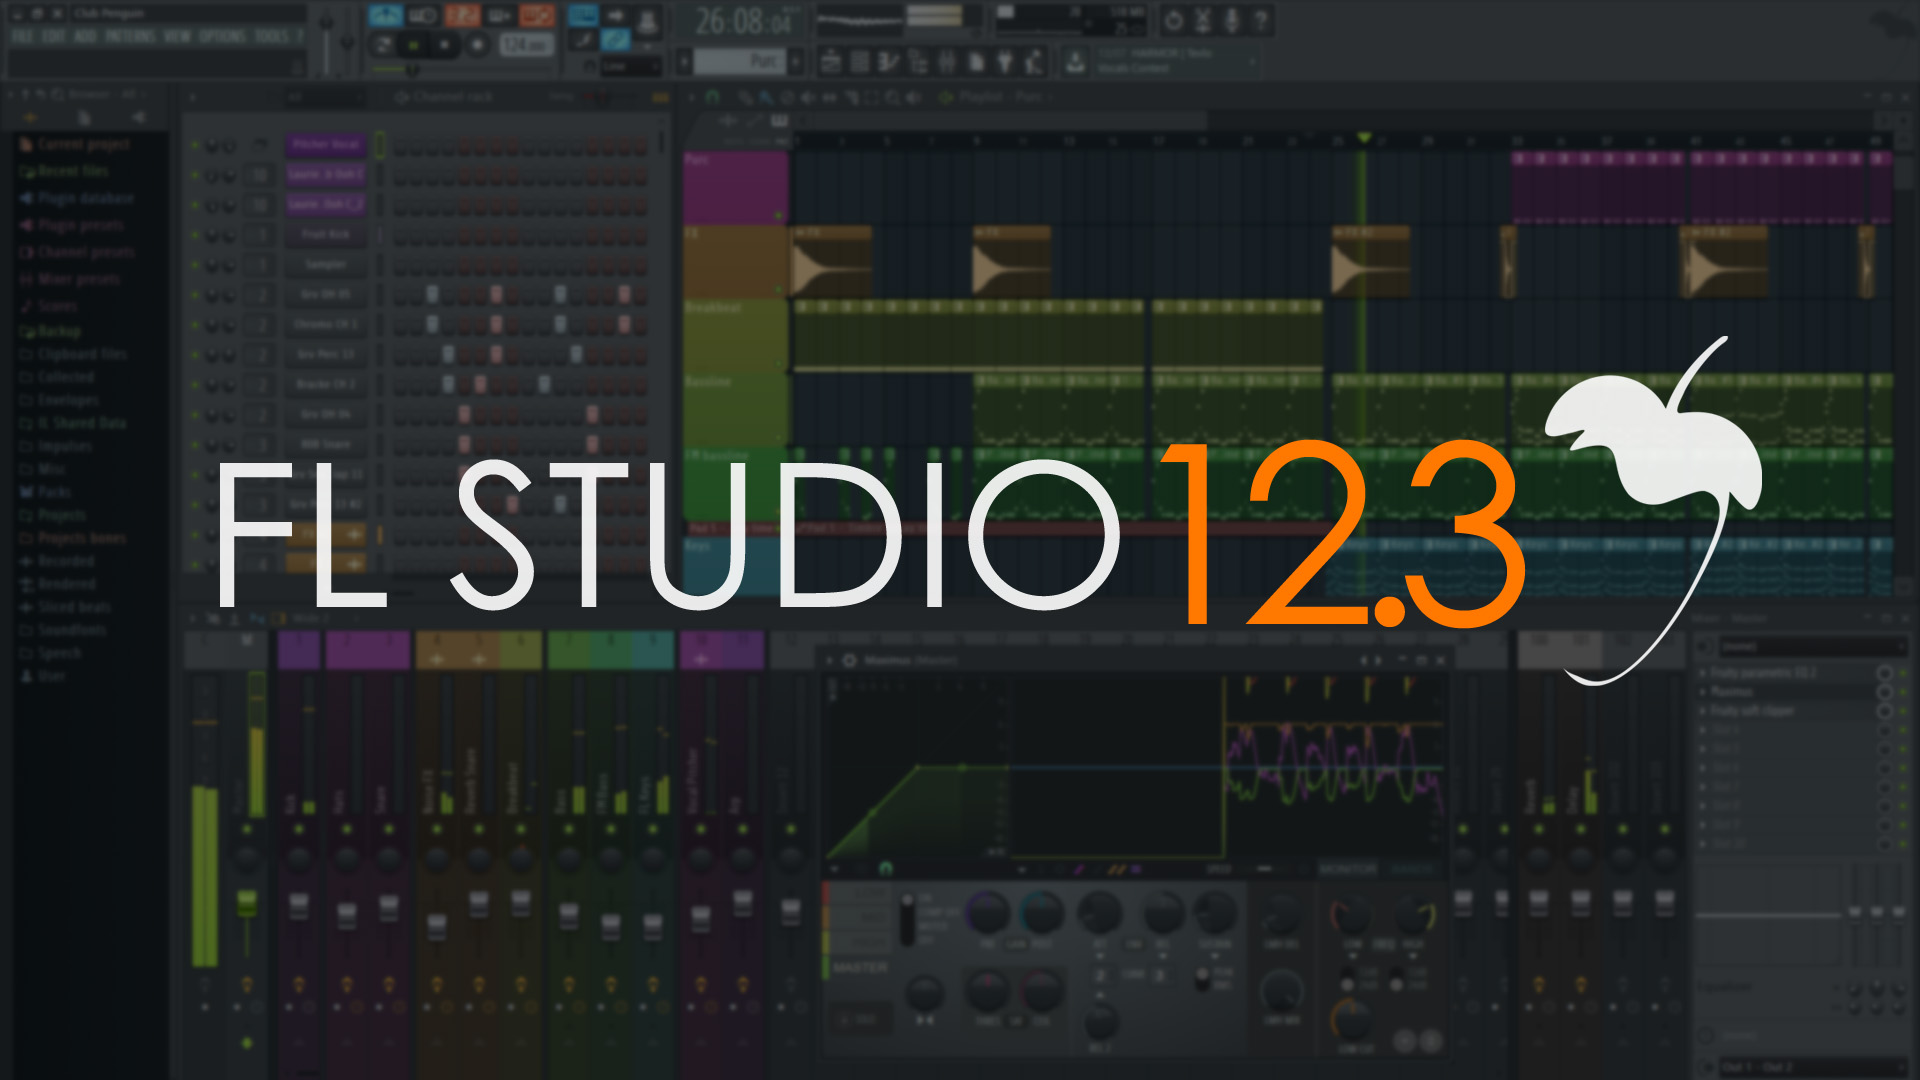 Can I update a pirated version of fl studio 12? : Piracy